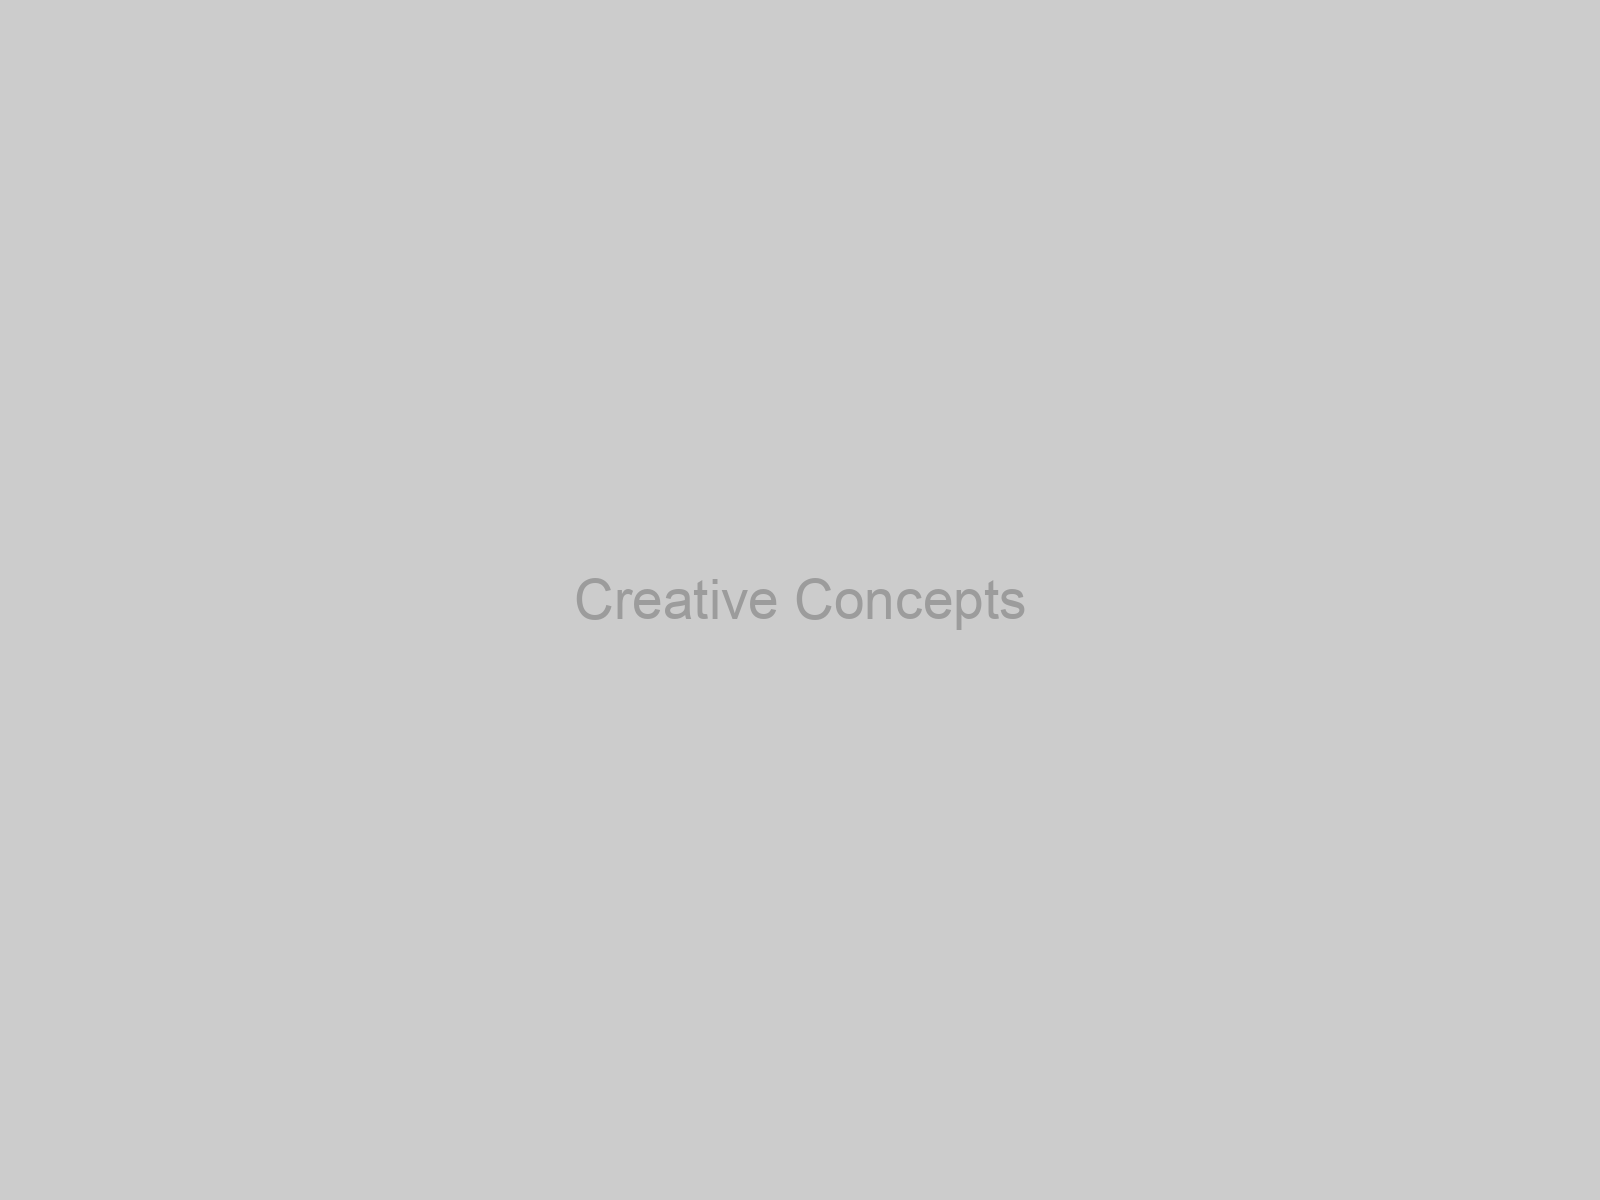 Creative Concepts